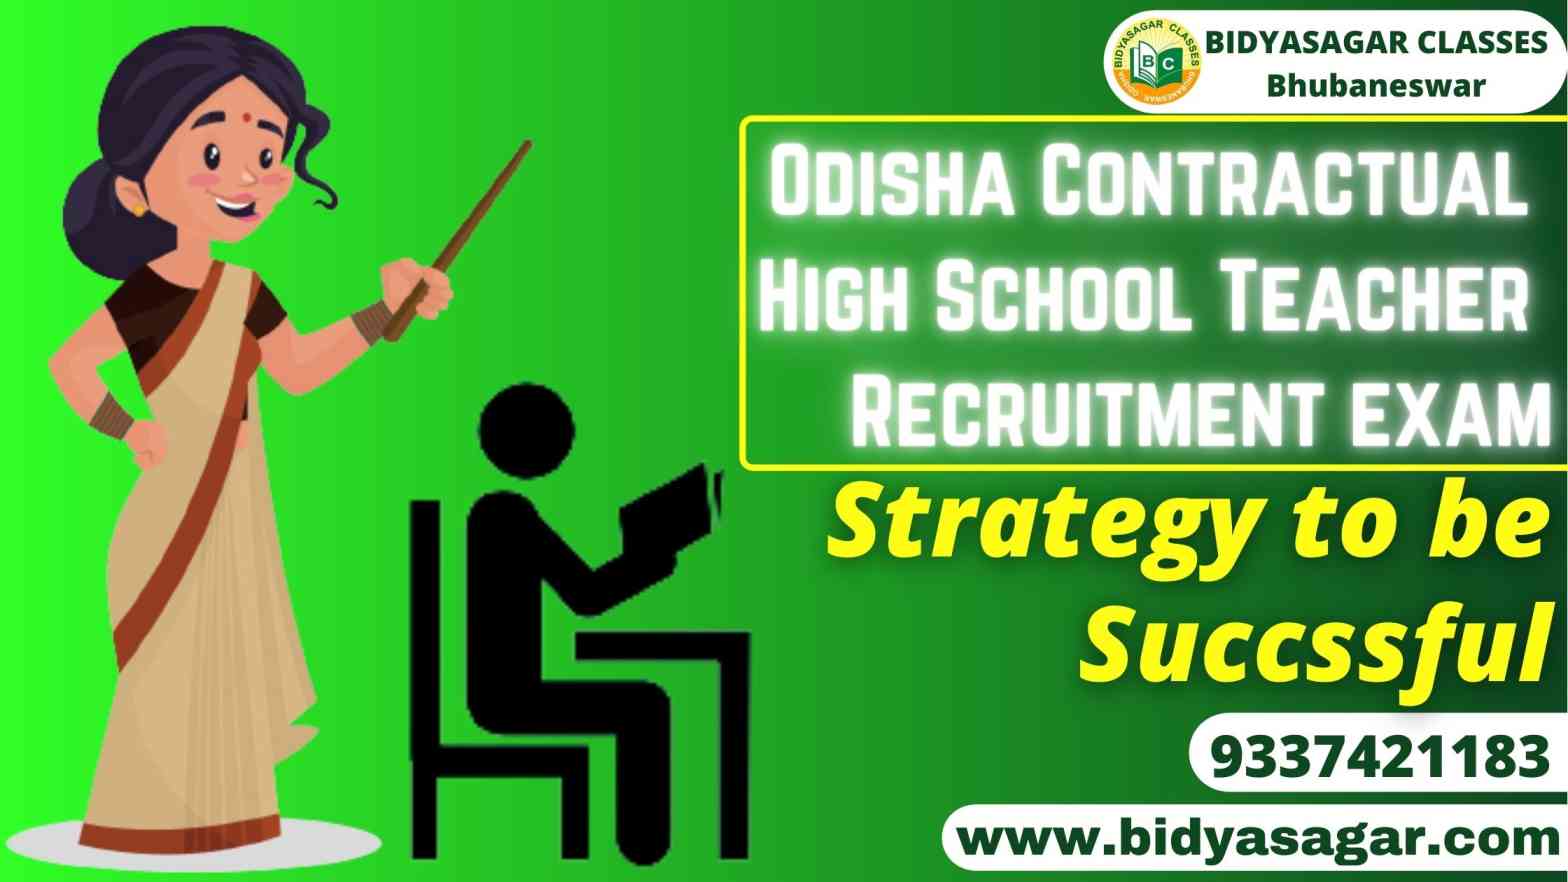 Best Strategy to become Successful in Odisha Contractual High School Teacher Recruitment Exam 2022